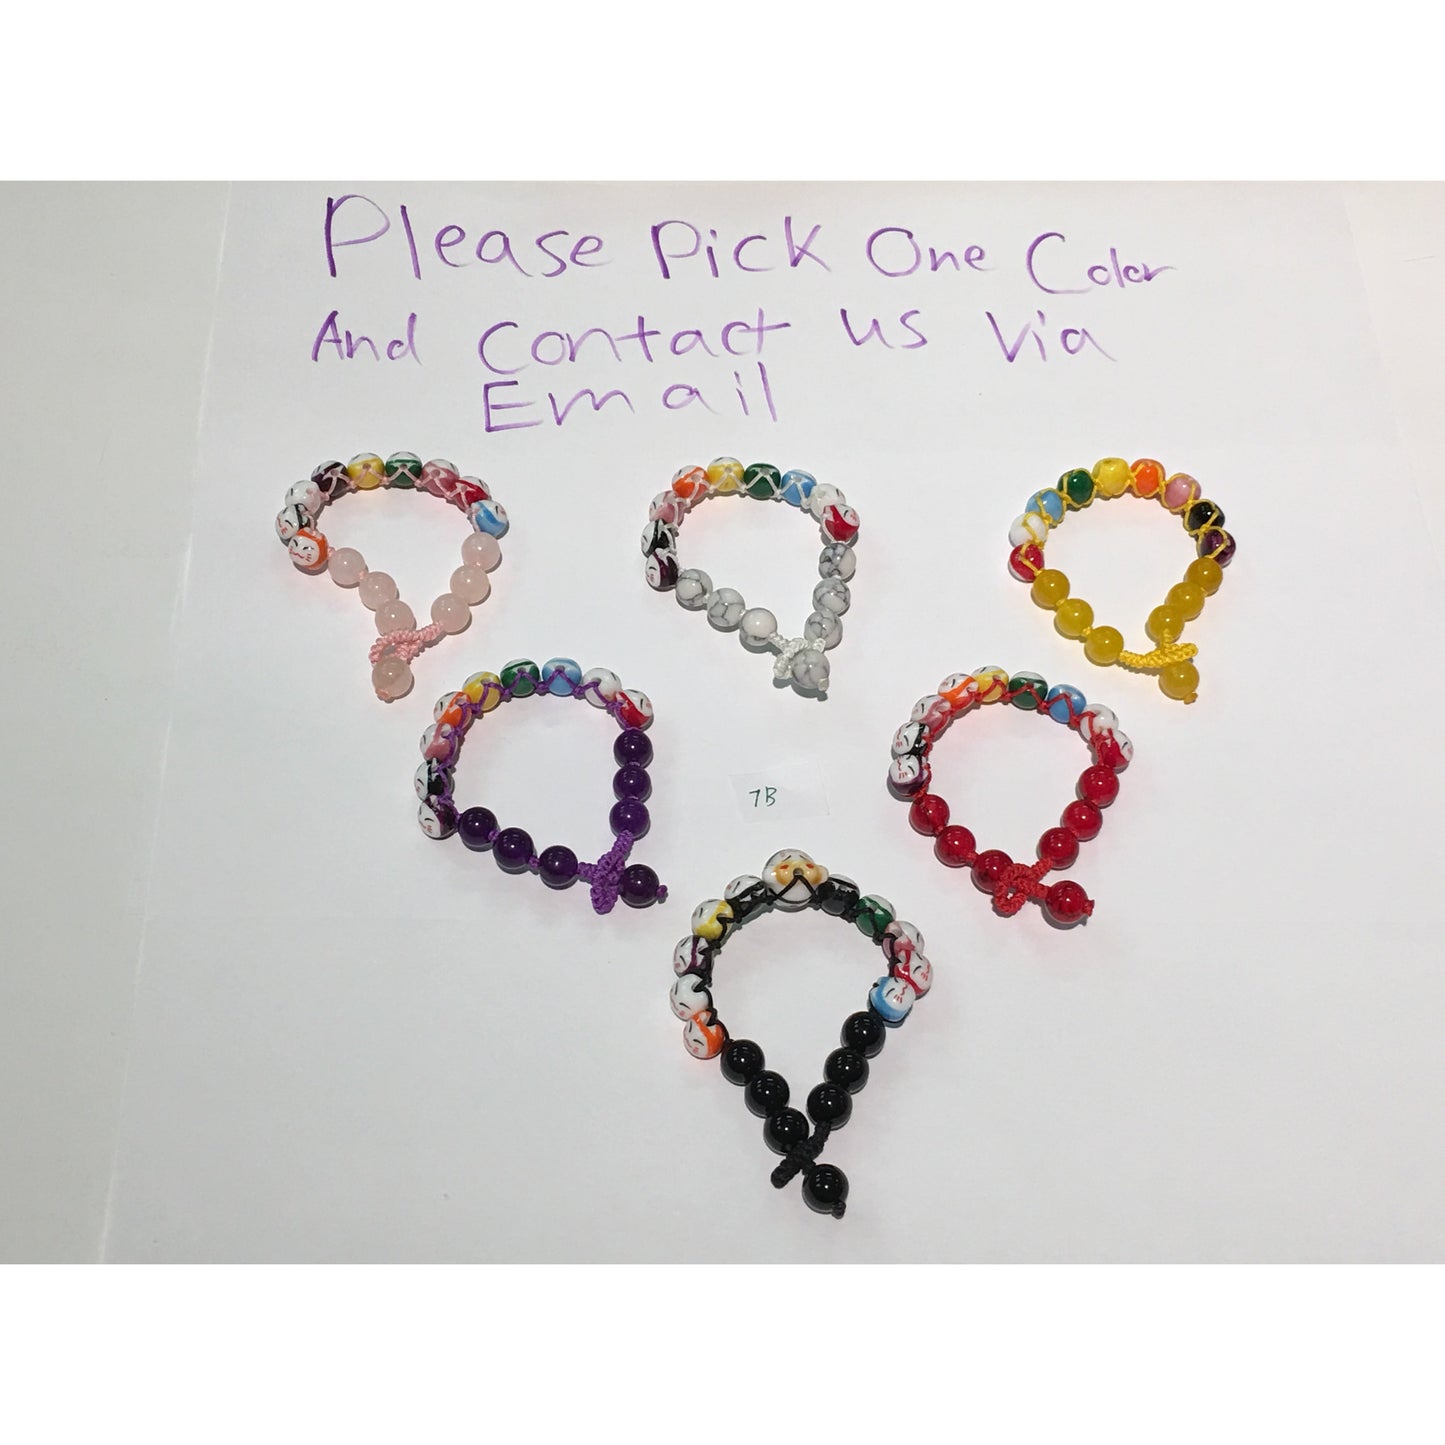 7B (9 different lucky cats + 6 beads) bracelet,